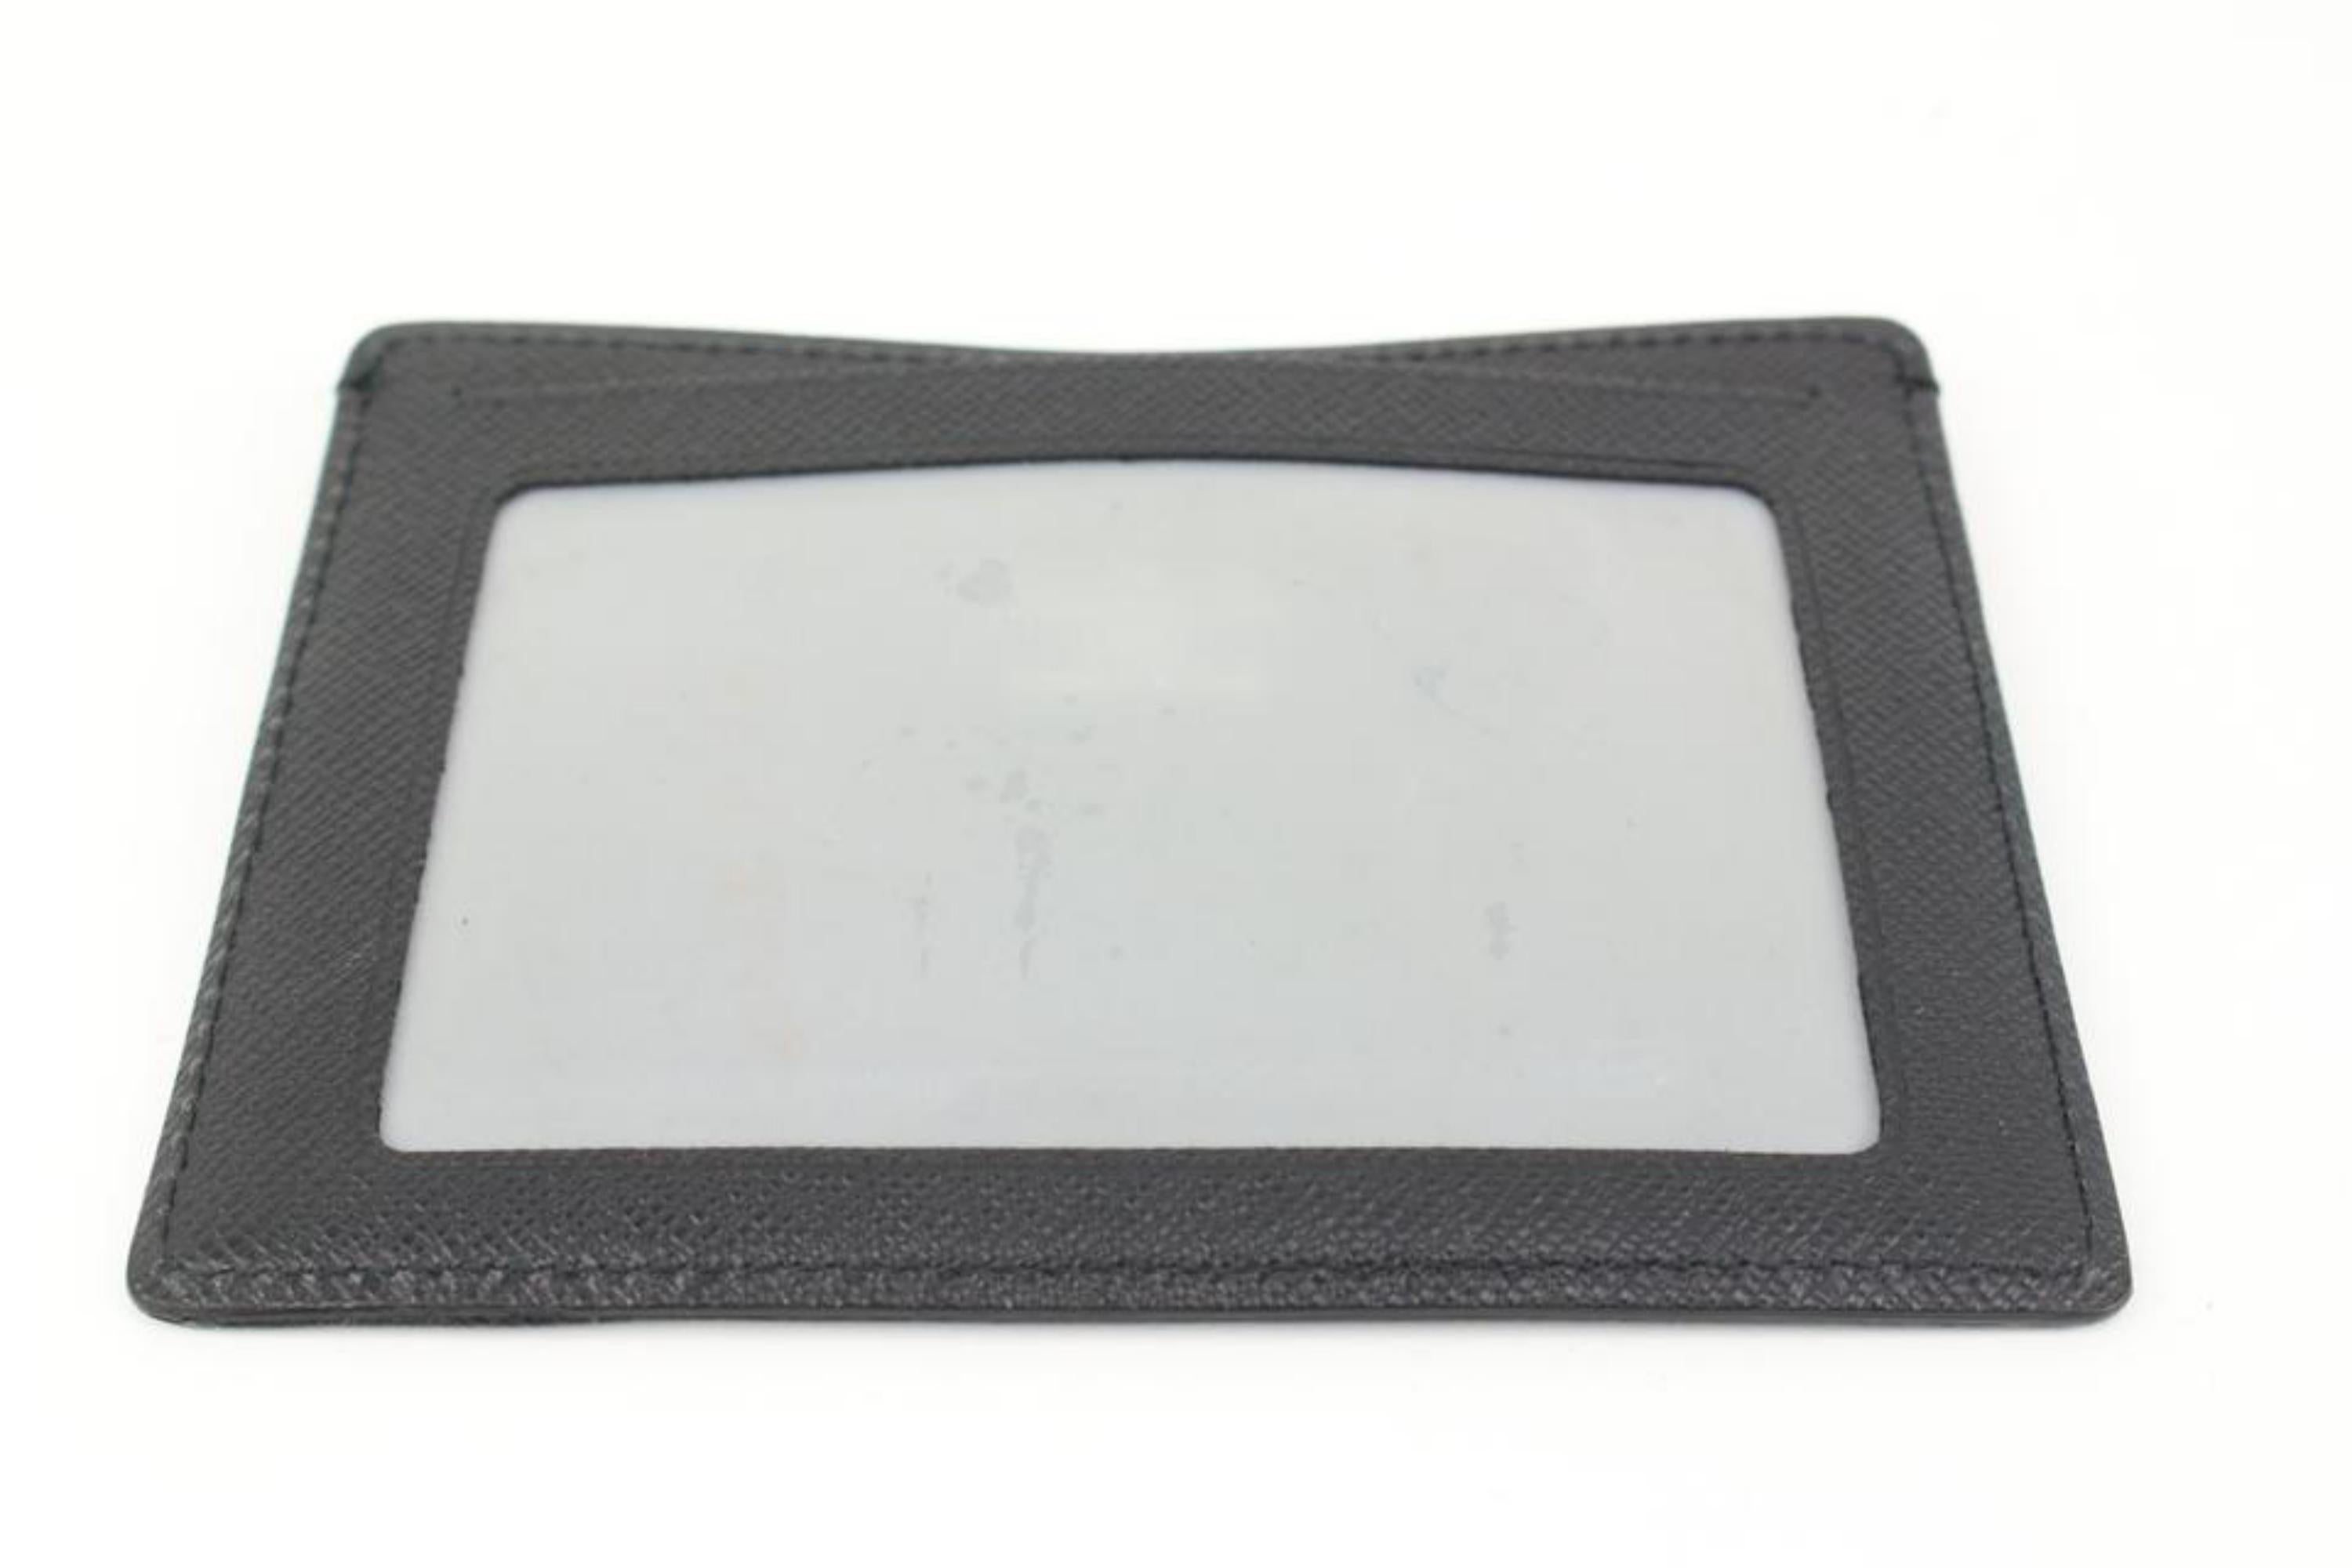 Black Louis Vuitton Damier Graphite Large Card Holder Wallet Case Insert 1LVA726